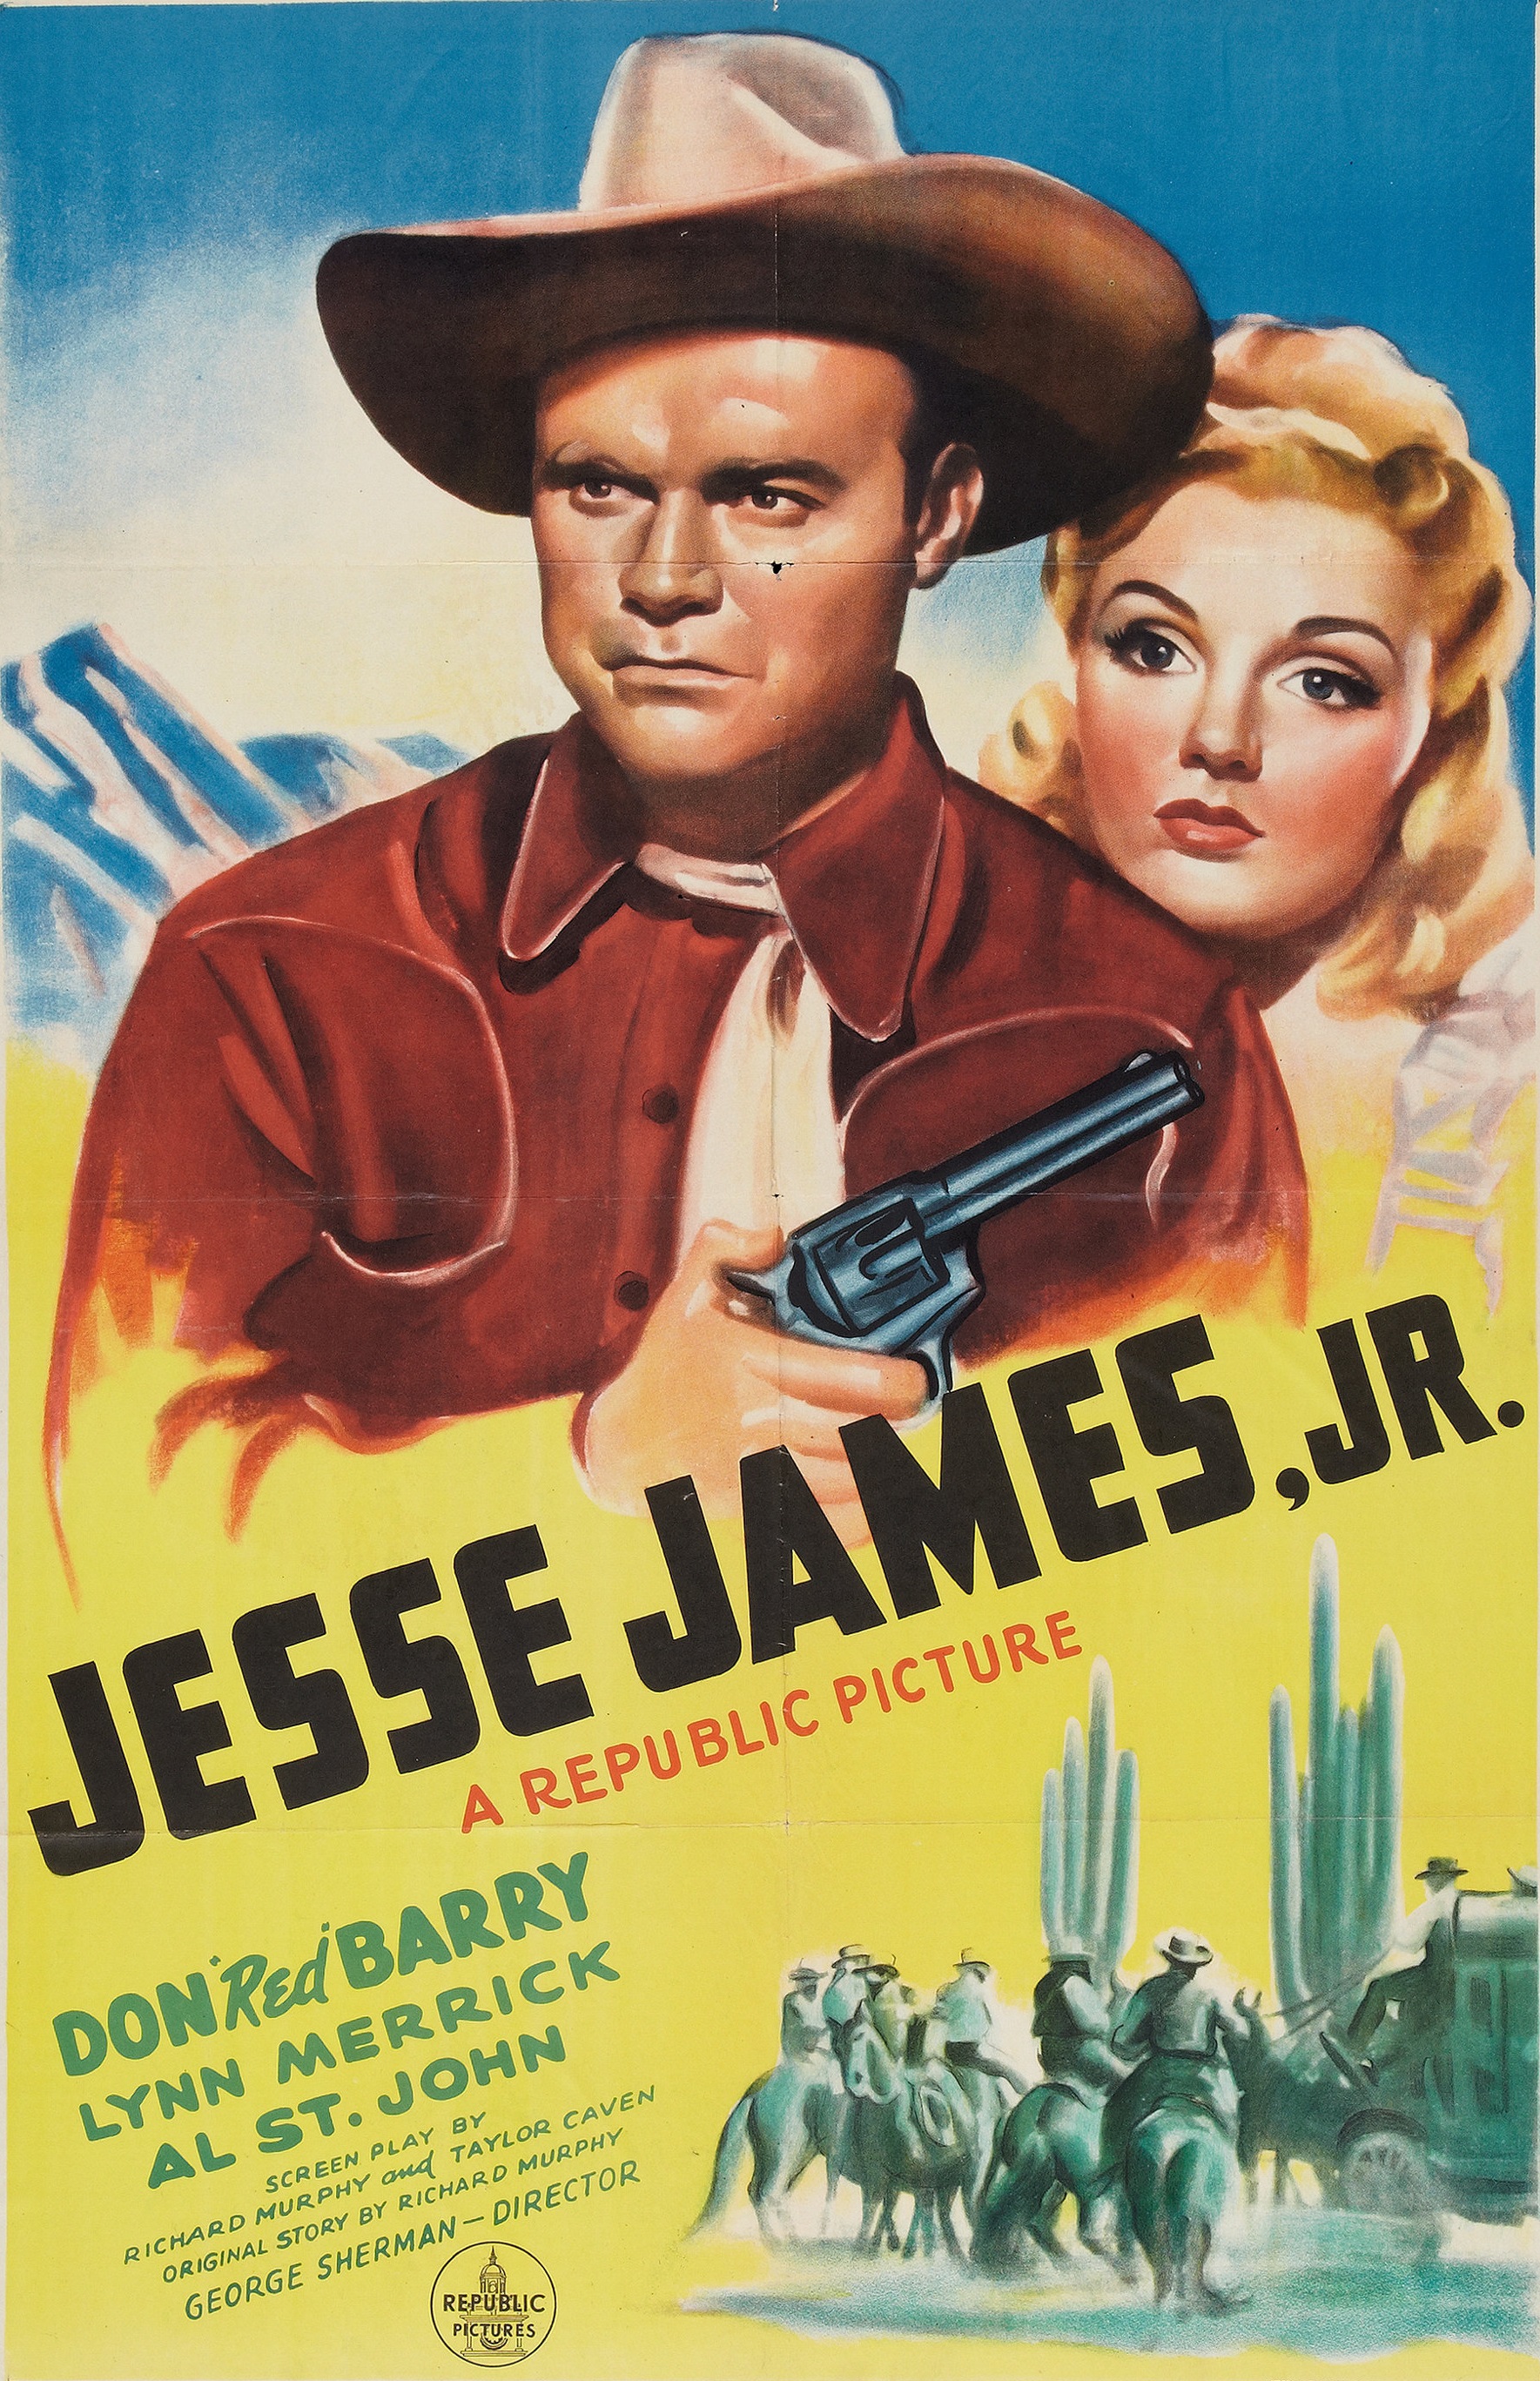 Jesse James, Jr.